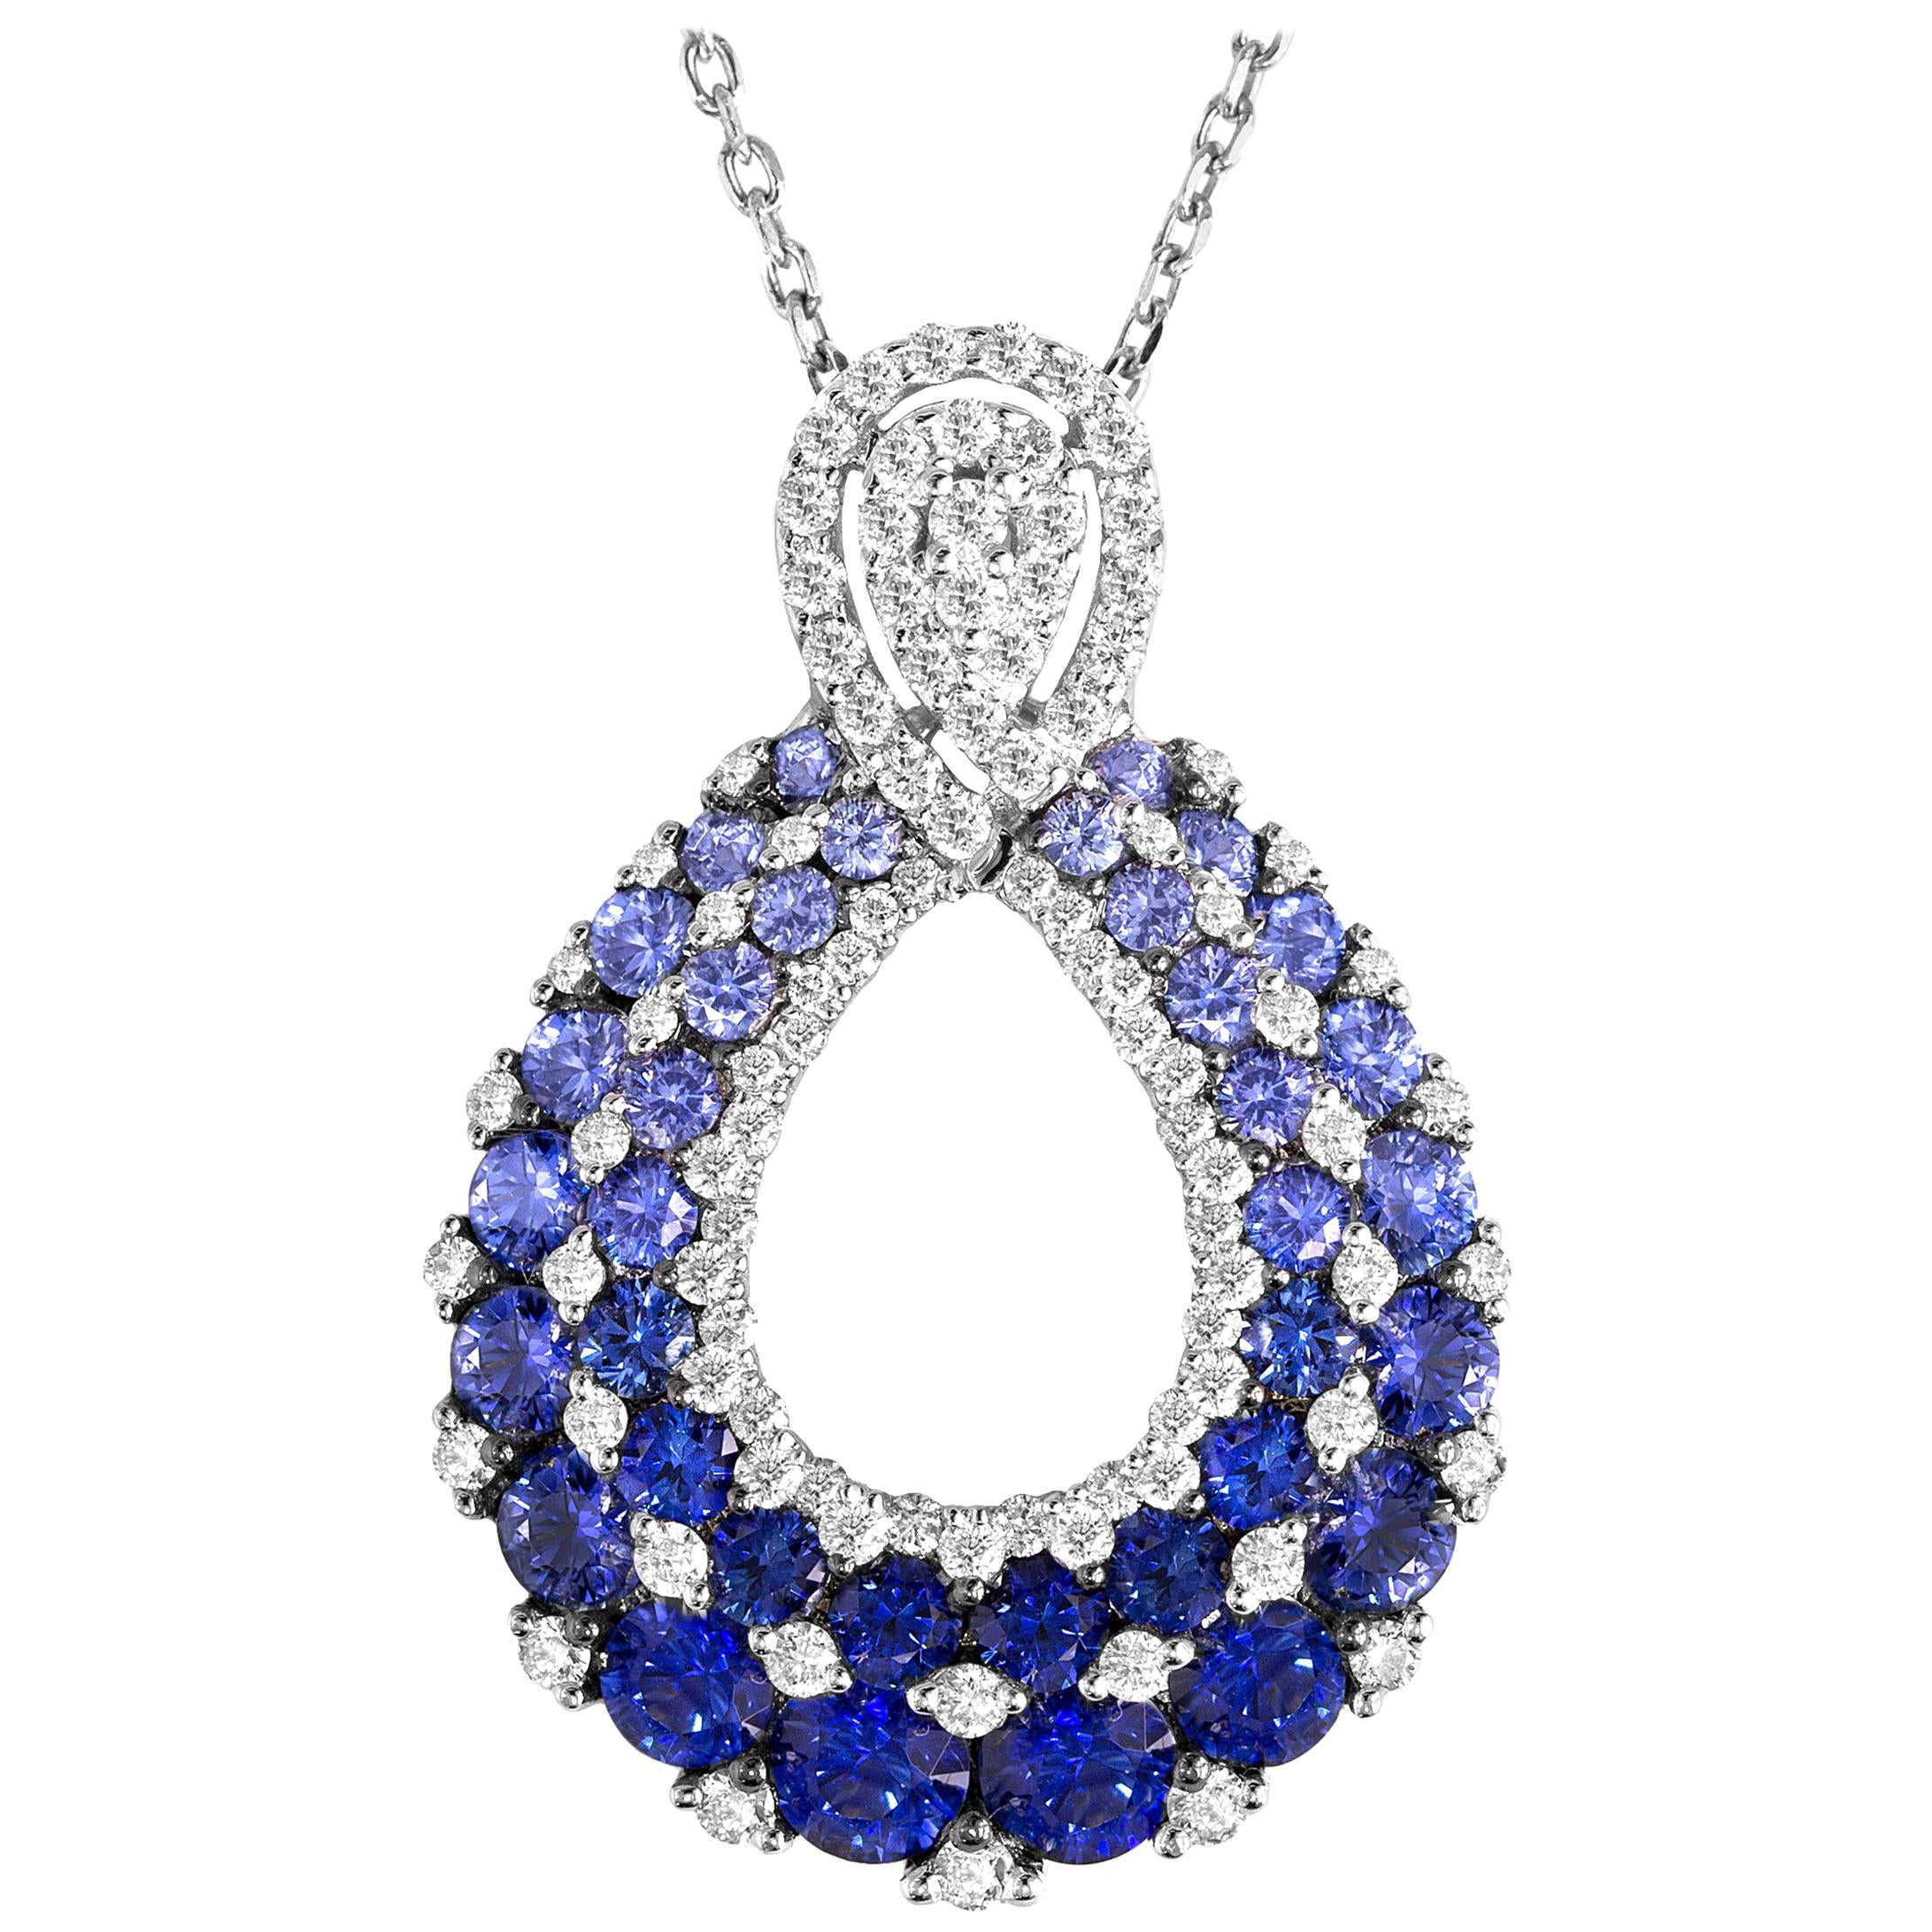 2.20 Carat Vivid Blue Sapphire and 0.52 Carat Diamond Peacock Pendant ref2185 For Sale